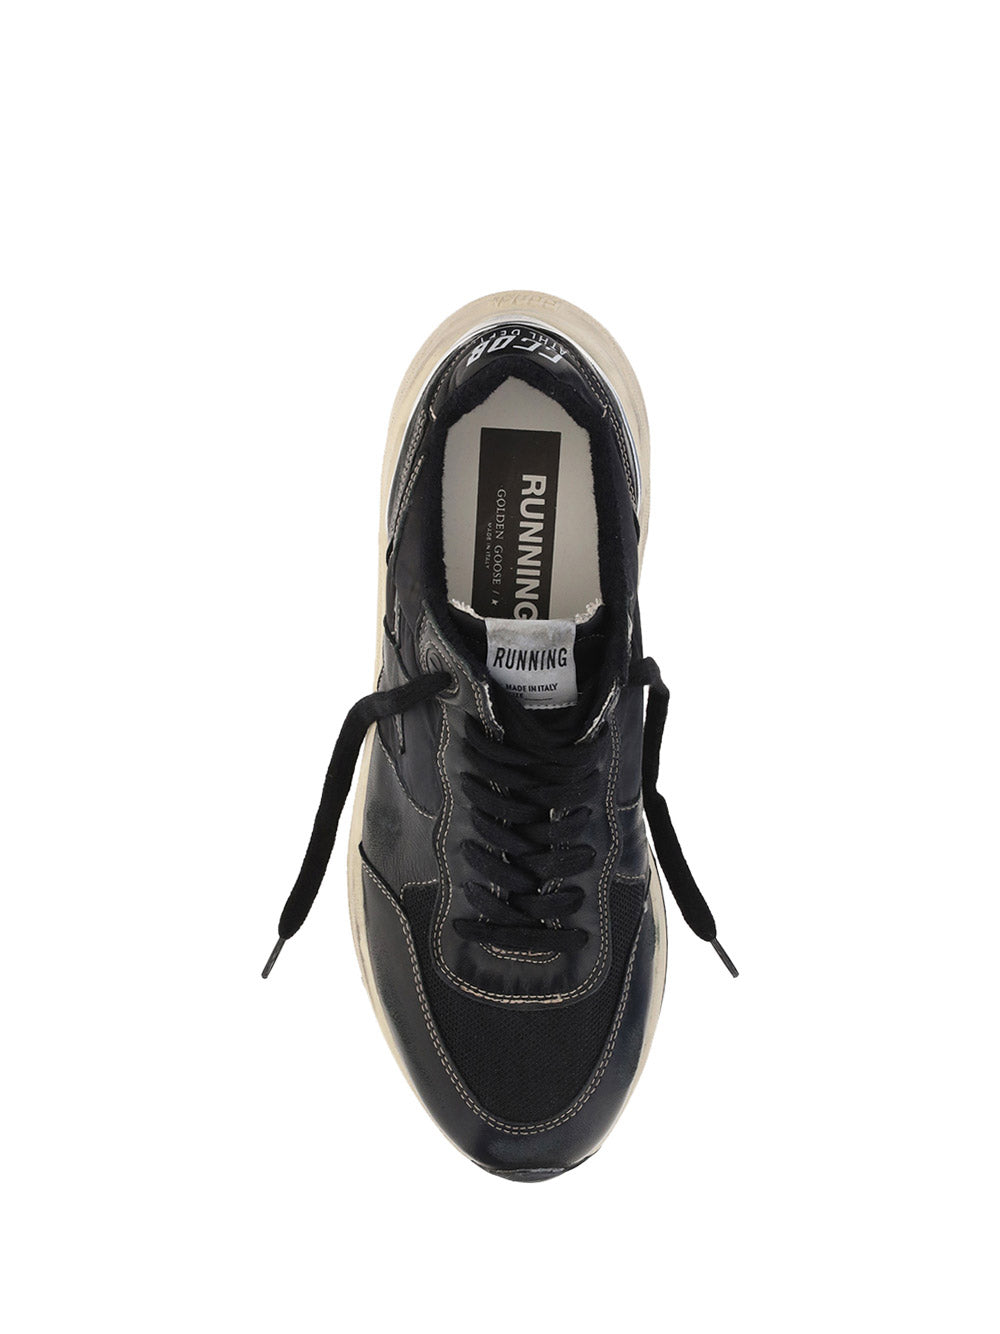 Running Sole Sneakers - Black